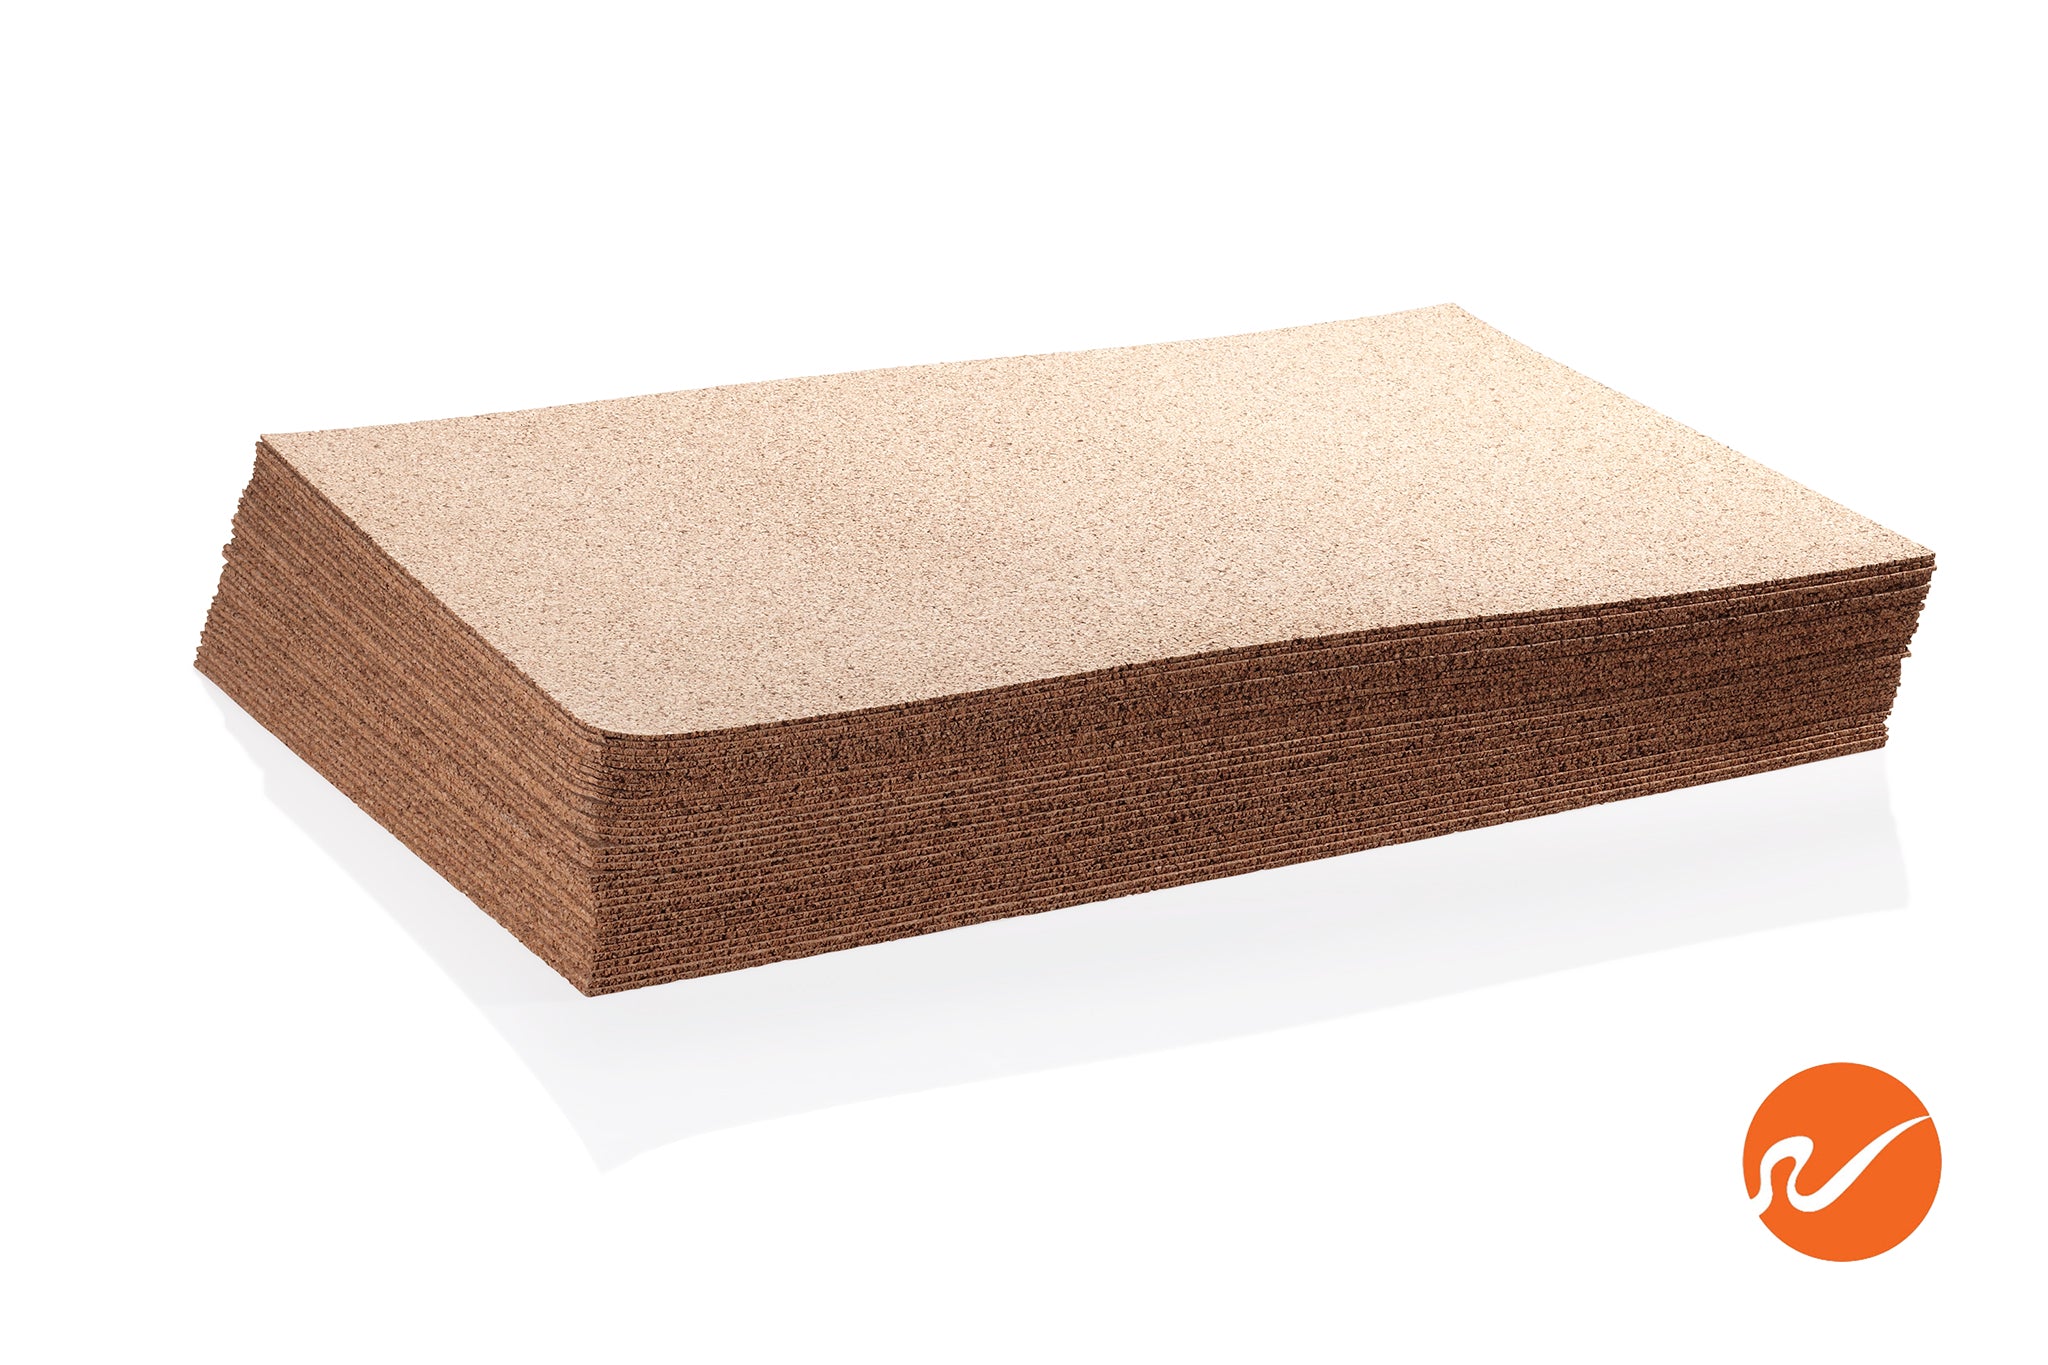 3mm Eco-Cork Underlayment - Acoustic Flooring Underlay